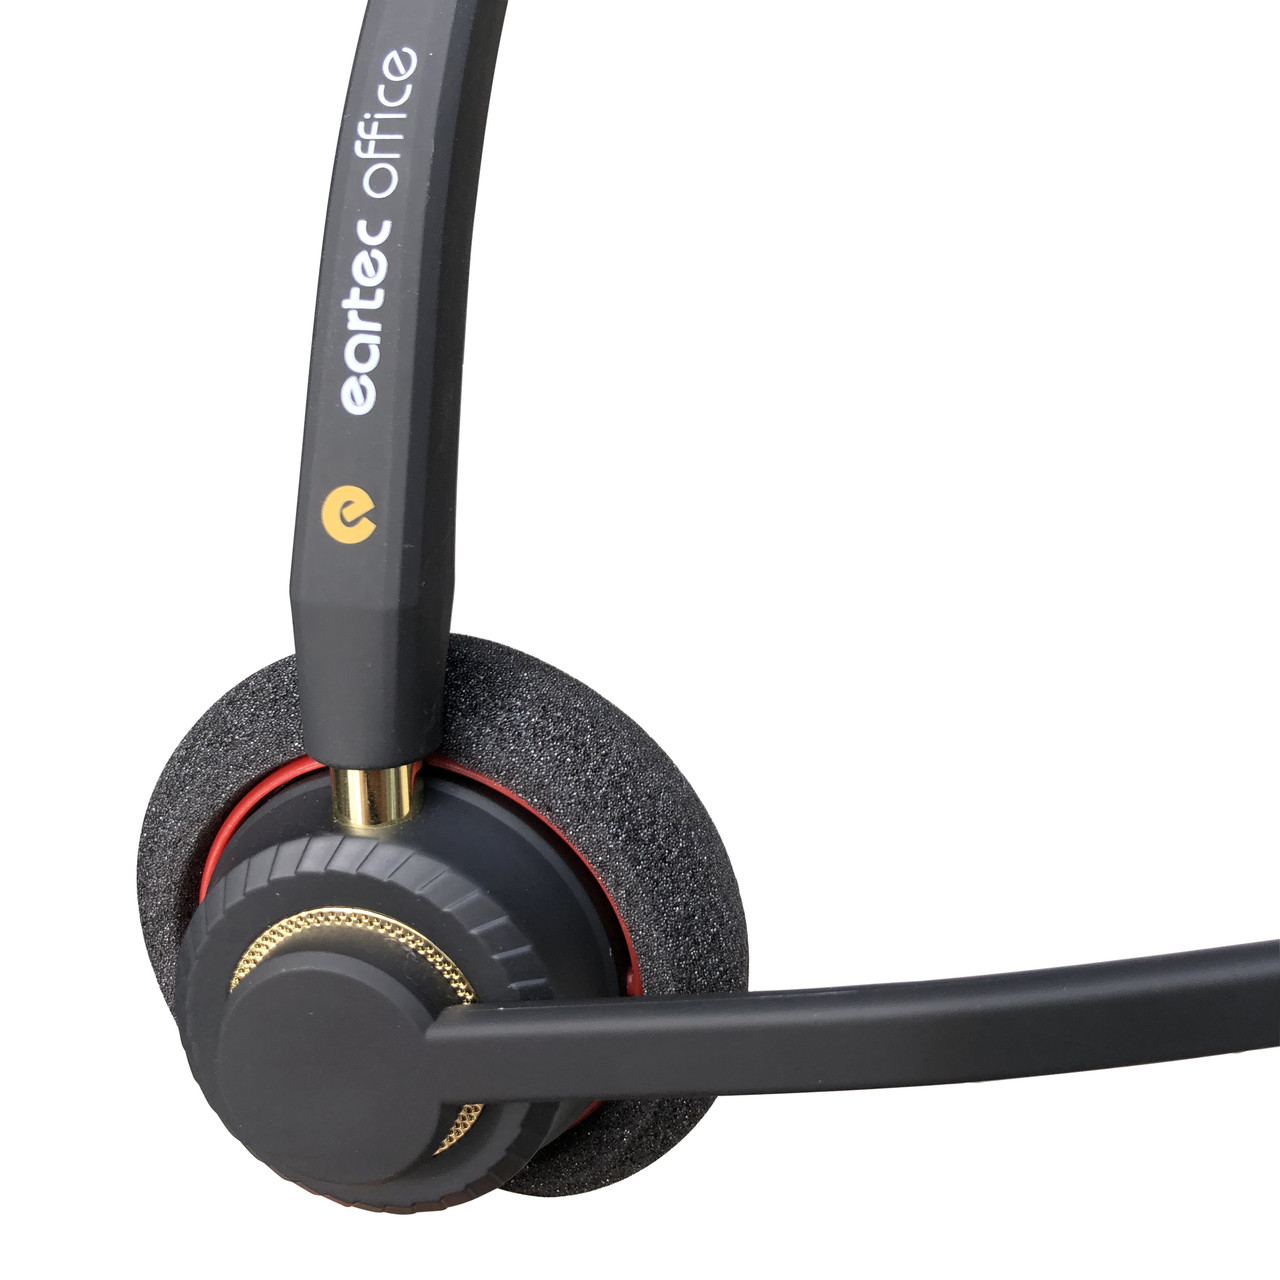 Nec DT300 Digital Headset - EAR510D